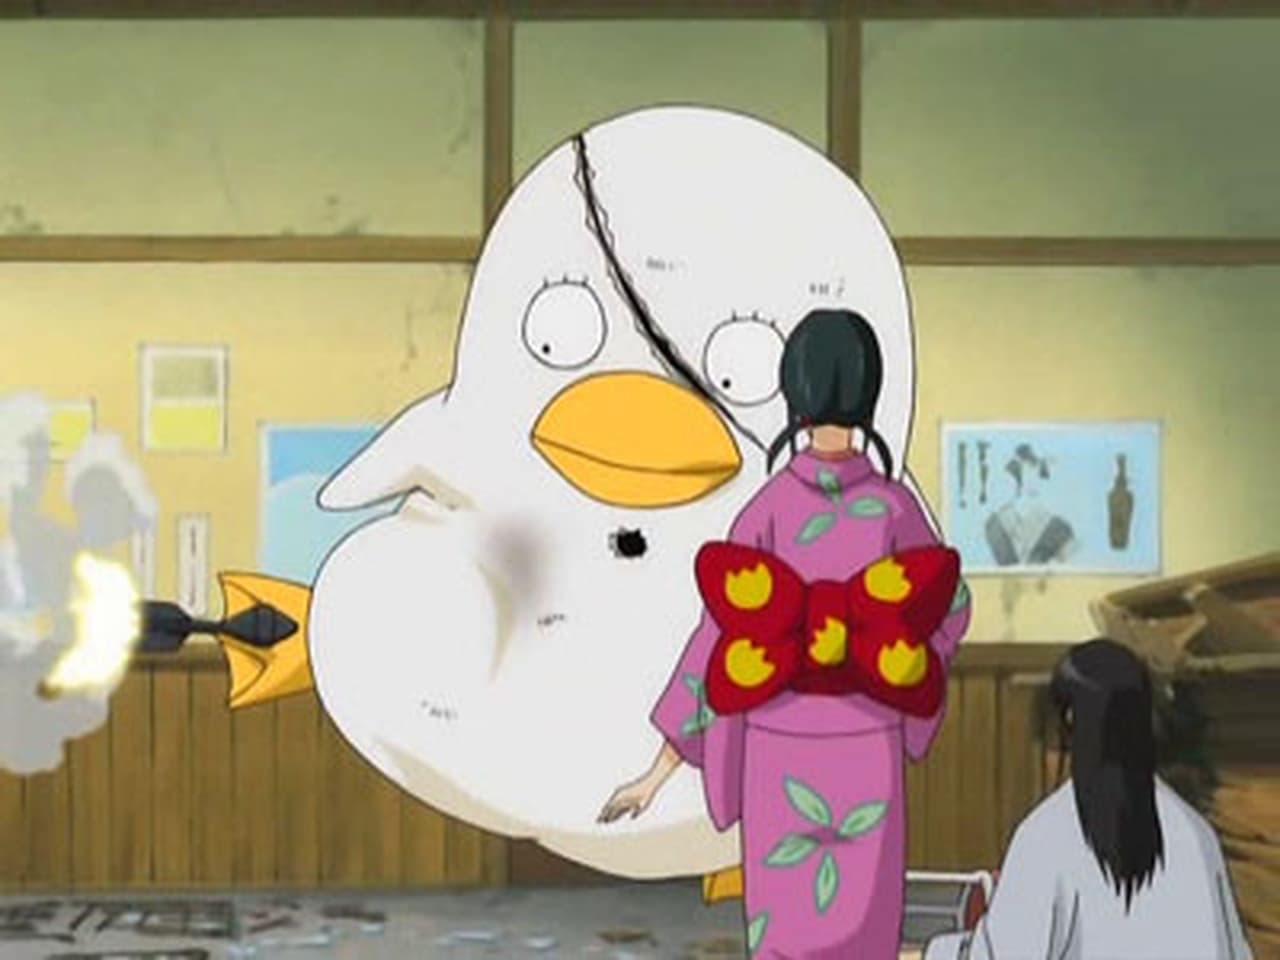 Gintama - Season 2 Episode 15 : Eating Nmaibo Can Make You Full in No Time!